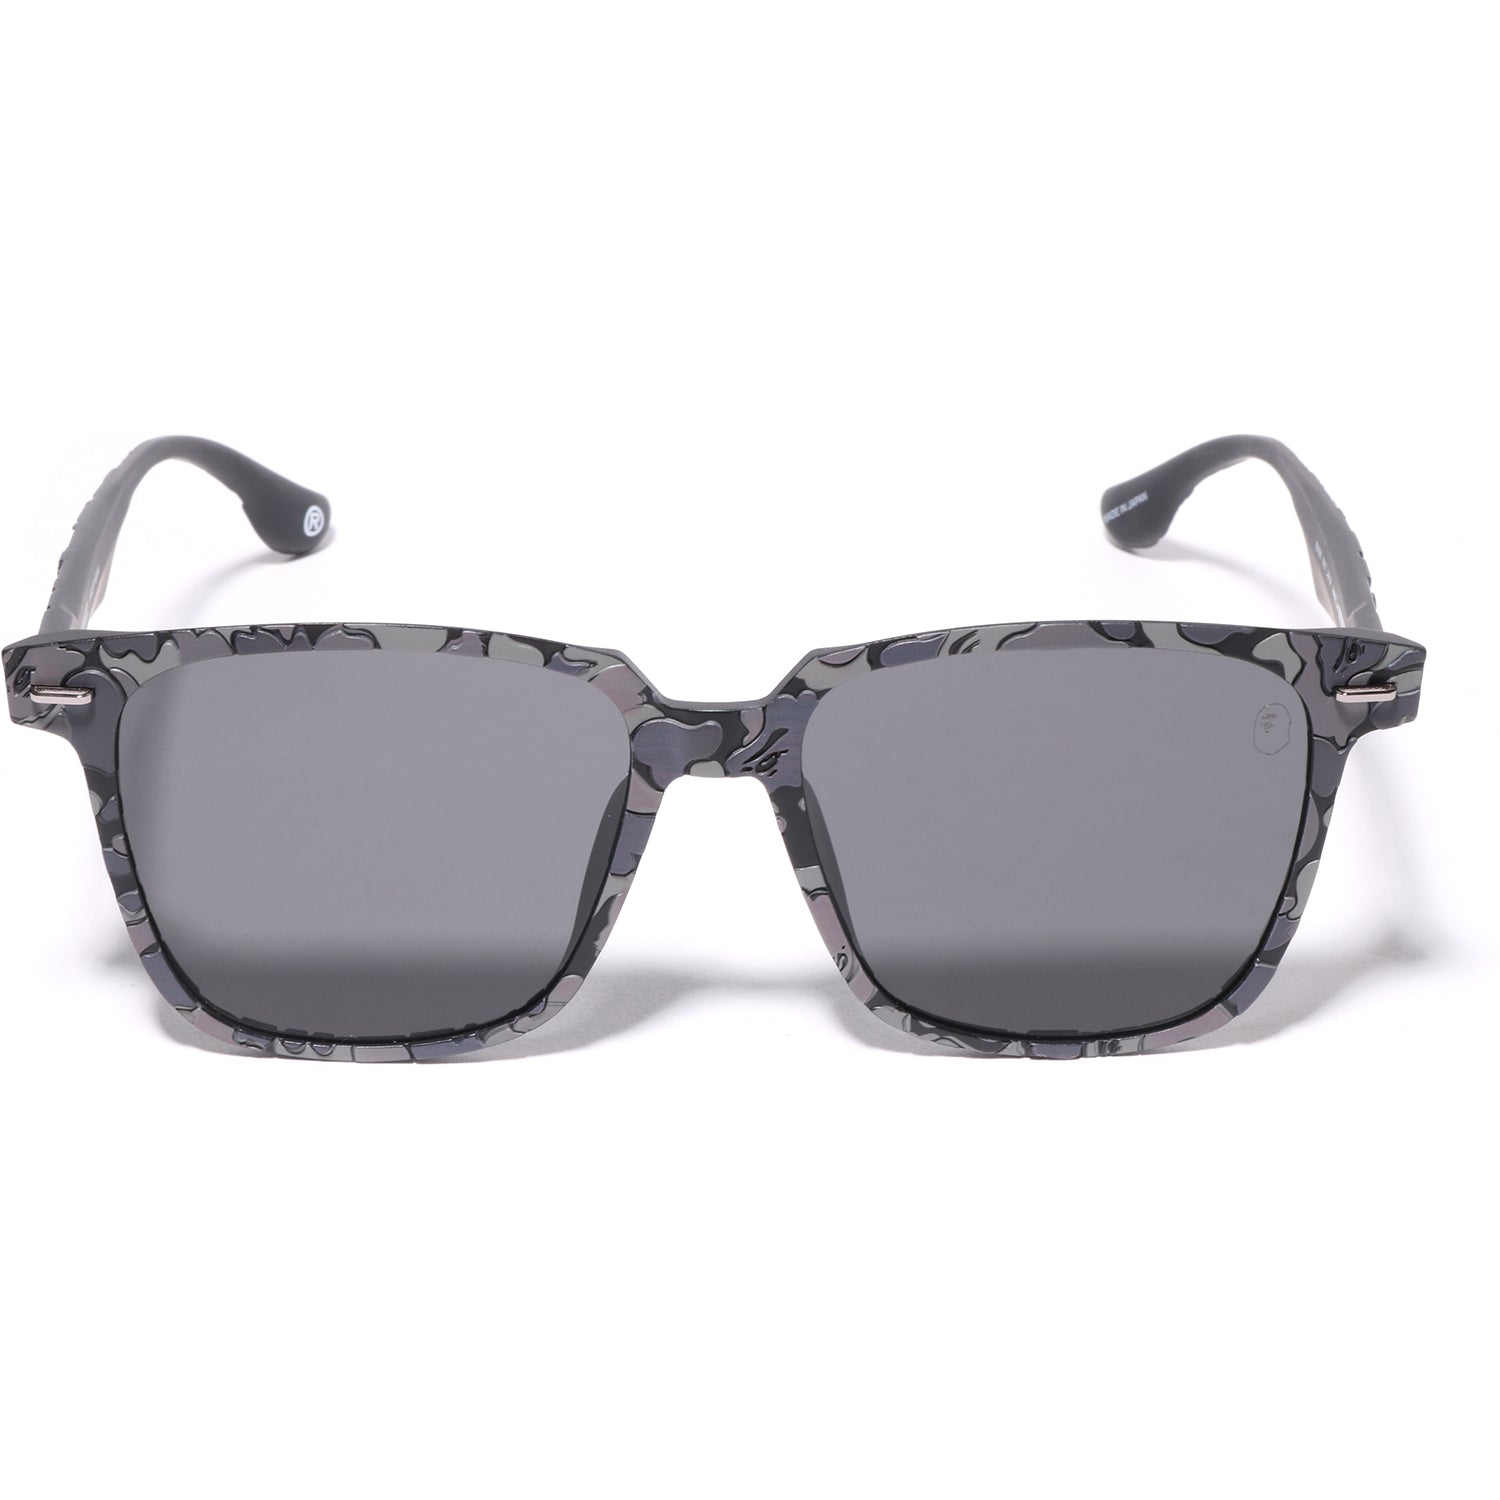 BAPE 6 Sunglasses Grey